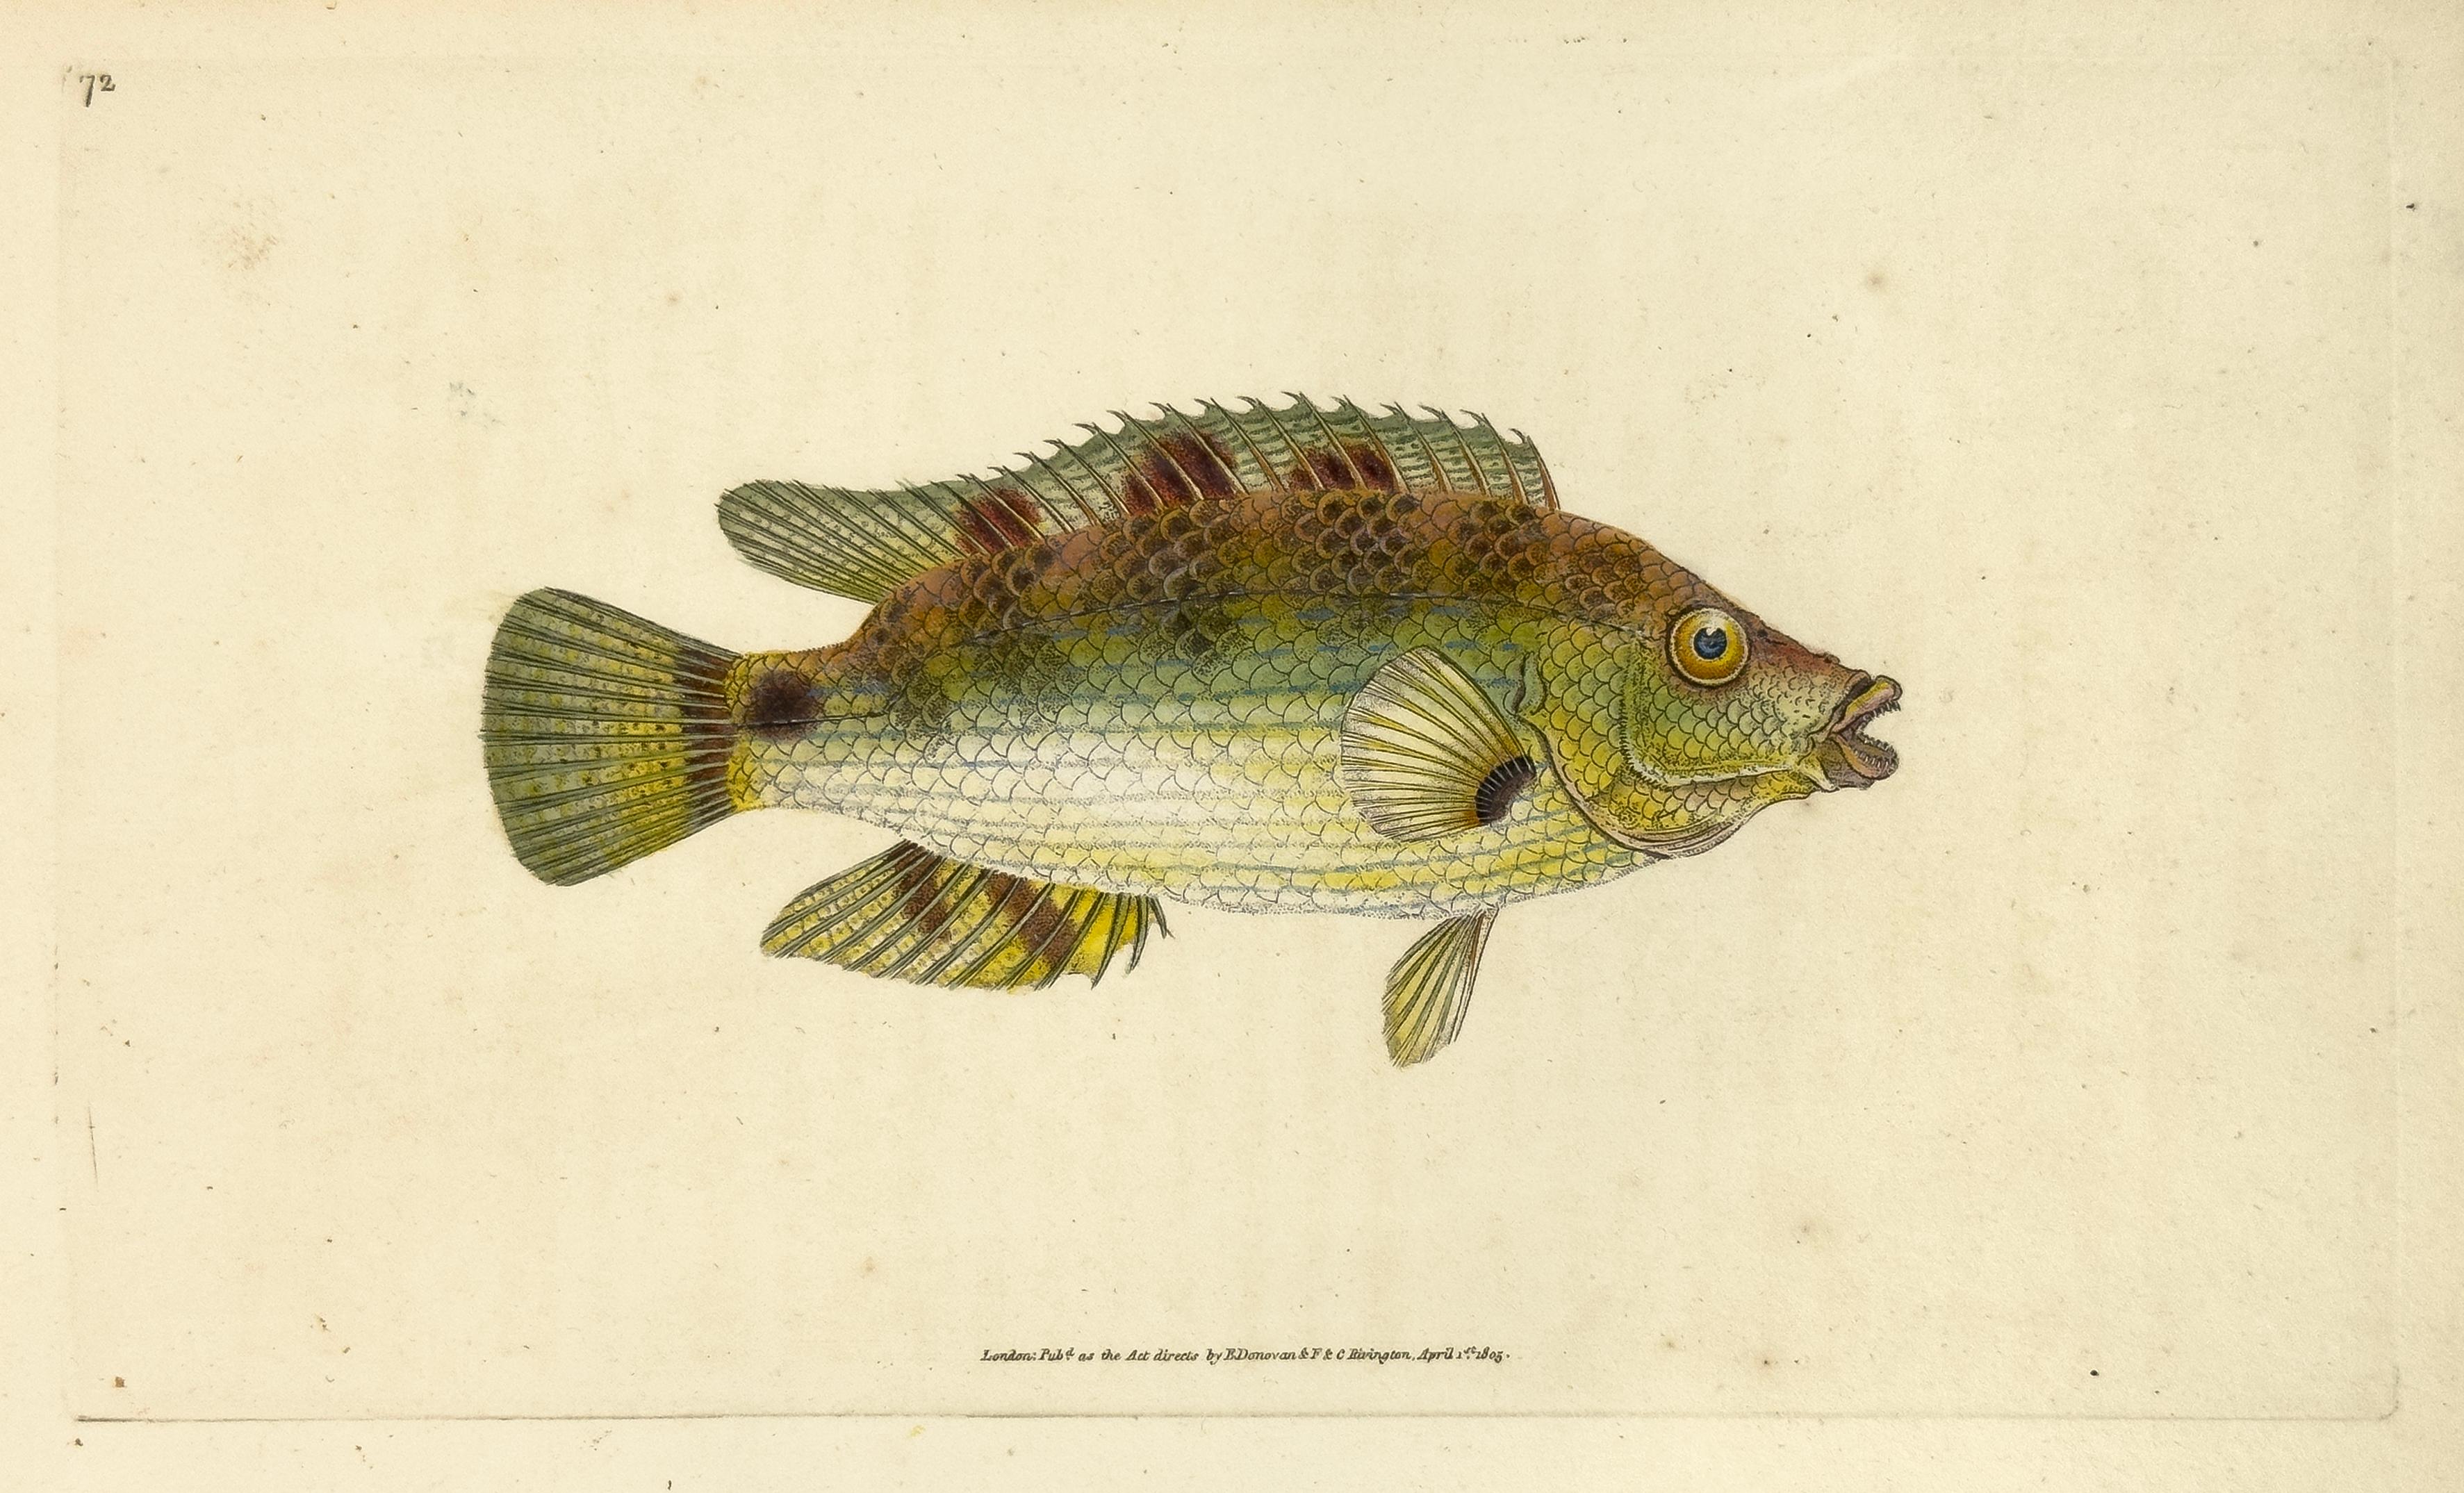 Edward Donovan Animal Print - 72: Labrus cornubius, Goldfinny